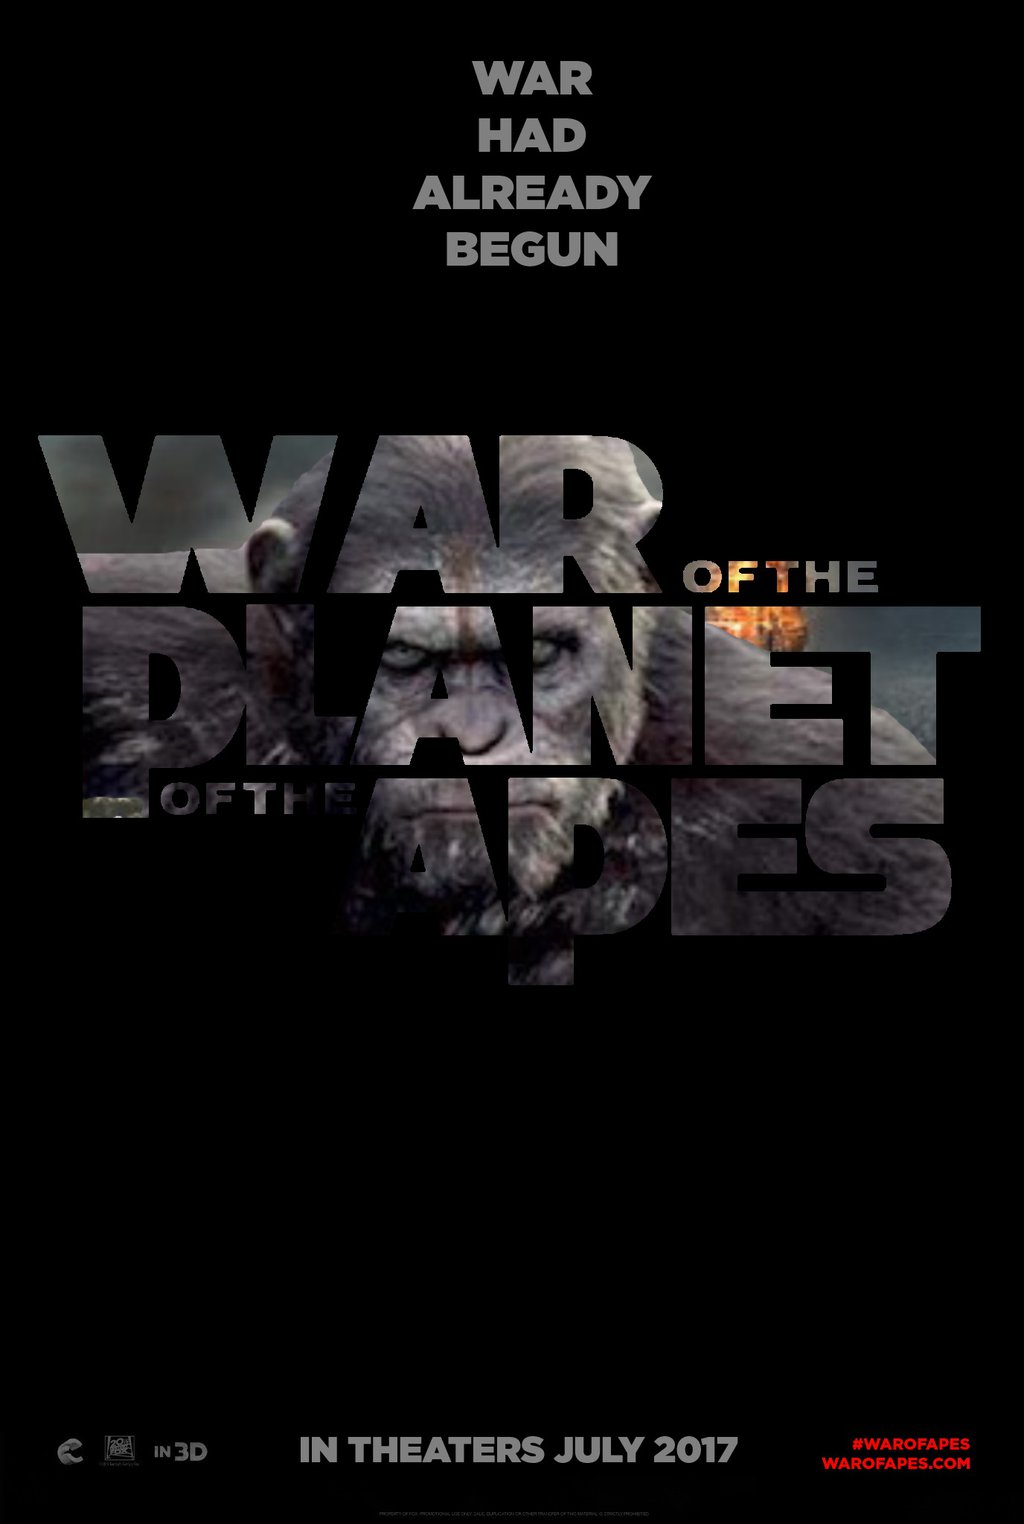 دانلود زیرنویس فارسی فیلم War for the Planet of the Apes 2017